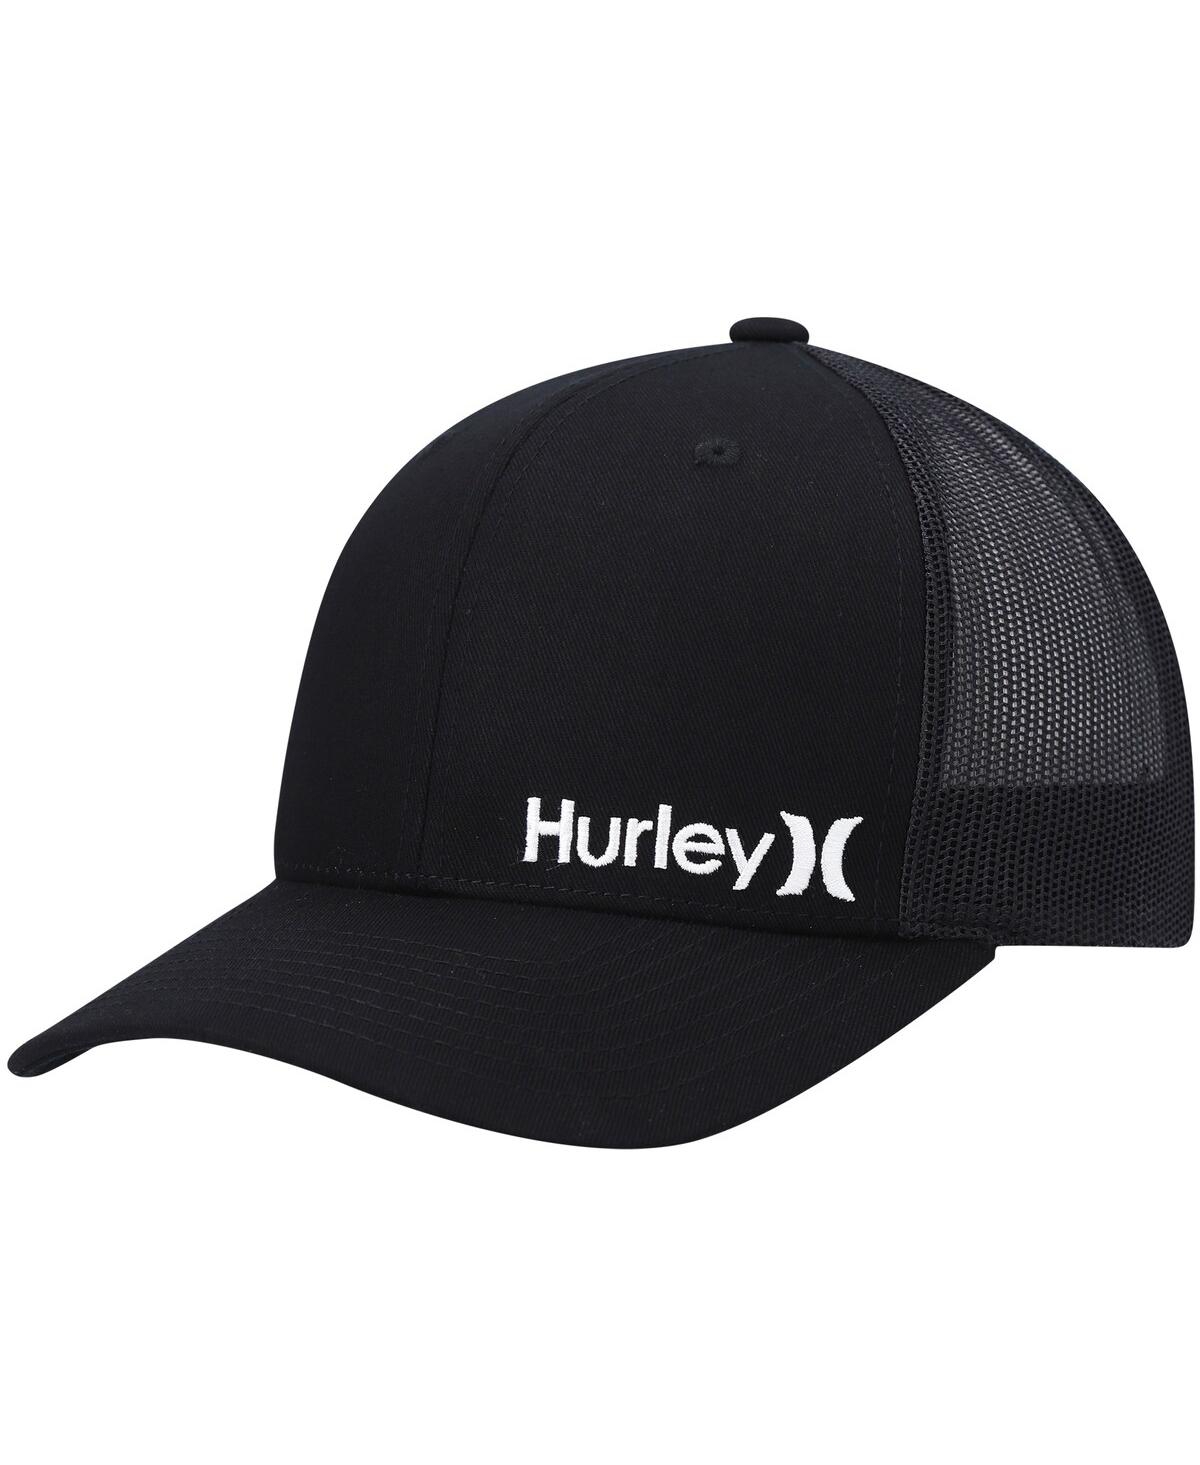 Men's Hurley Black Corp Staple Trucker Snapback Hat - Black